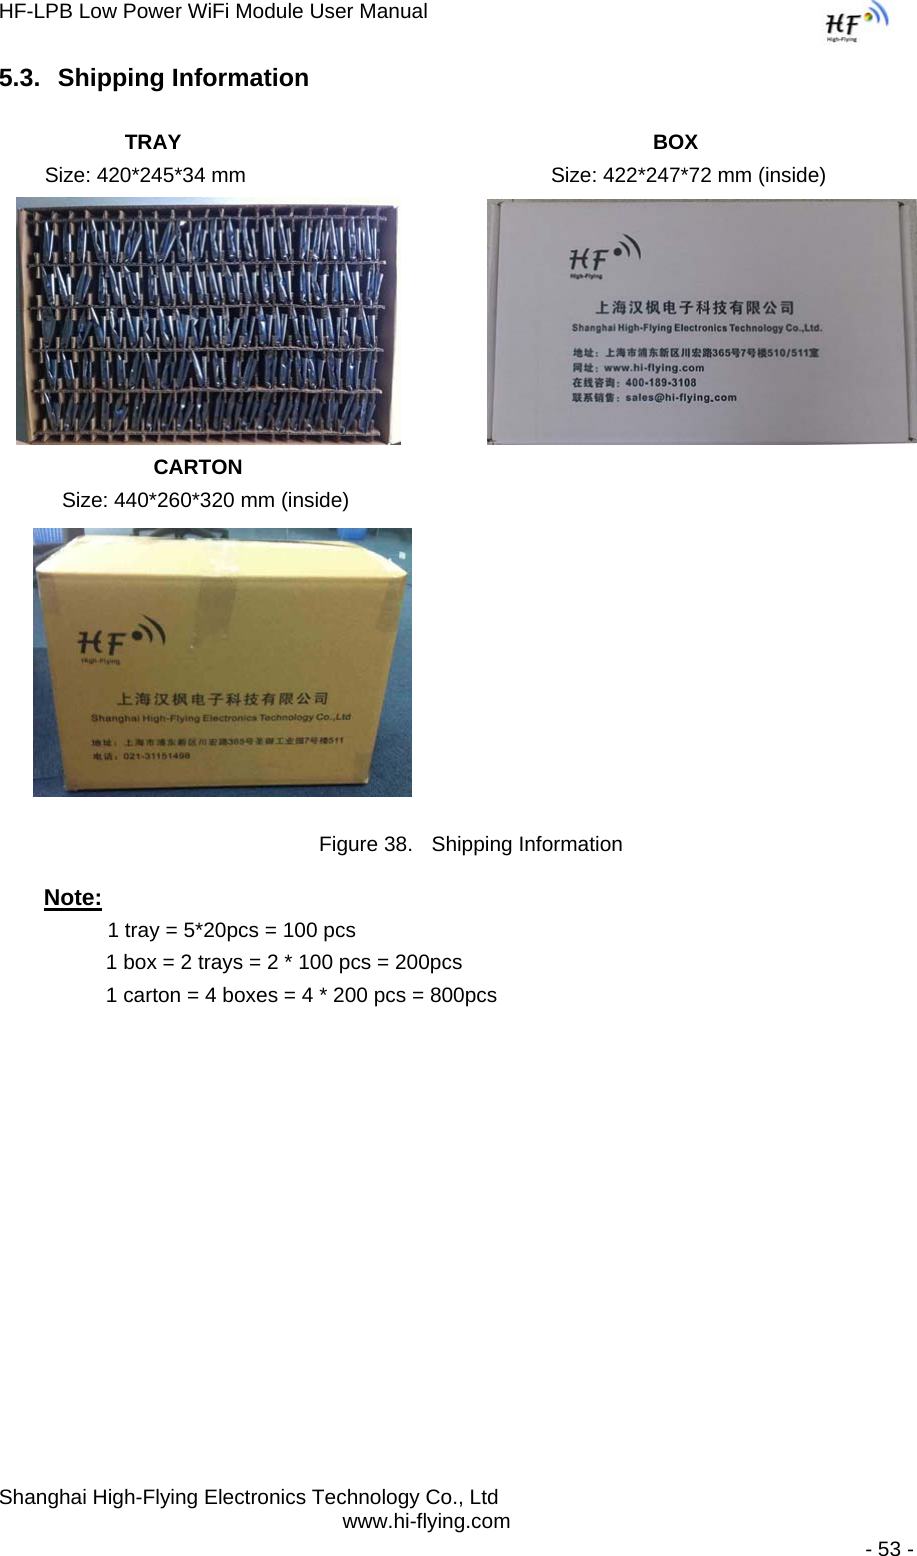 HF-LPB Low Power WiFi Module User Manual Shanghai High-Flying Electronics Technology Co., Ltd www.hi-flying.com   - 53 - 5.3. Shipping Information             TRAY                                                                                  BOX         Size: 420*245*34 mm                                                     Size: 422*247*72 mm (inside)                                CARTON                 Size: 440*260*320 mm (inside)       Figure 38.  Shipping Information Note:               1 tray = 5*20pcs = 100 pcs          1 box = 2 trays = 2 * 100 pcs = 200pcs           1 carton = 4 boxes = 4 * 200 pcs = 800pcs         